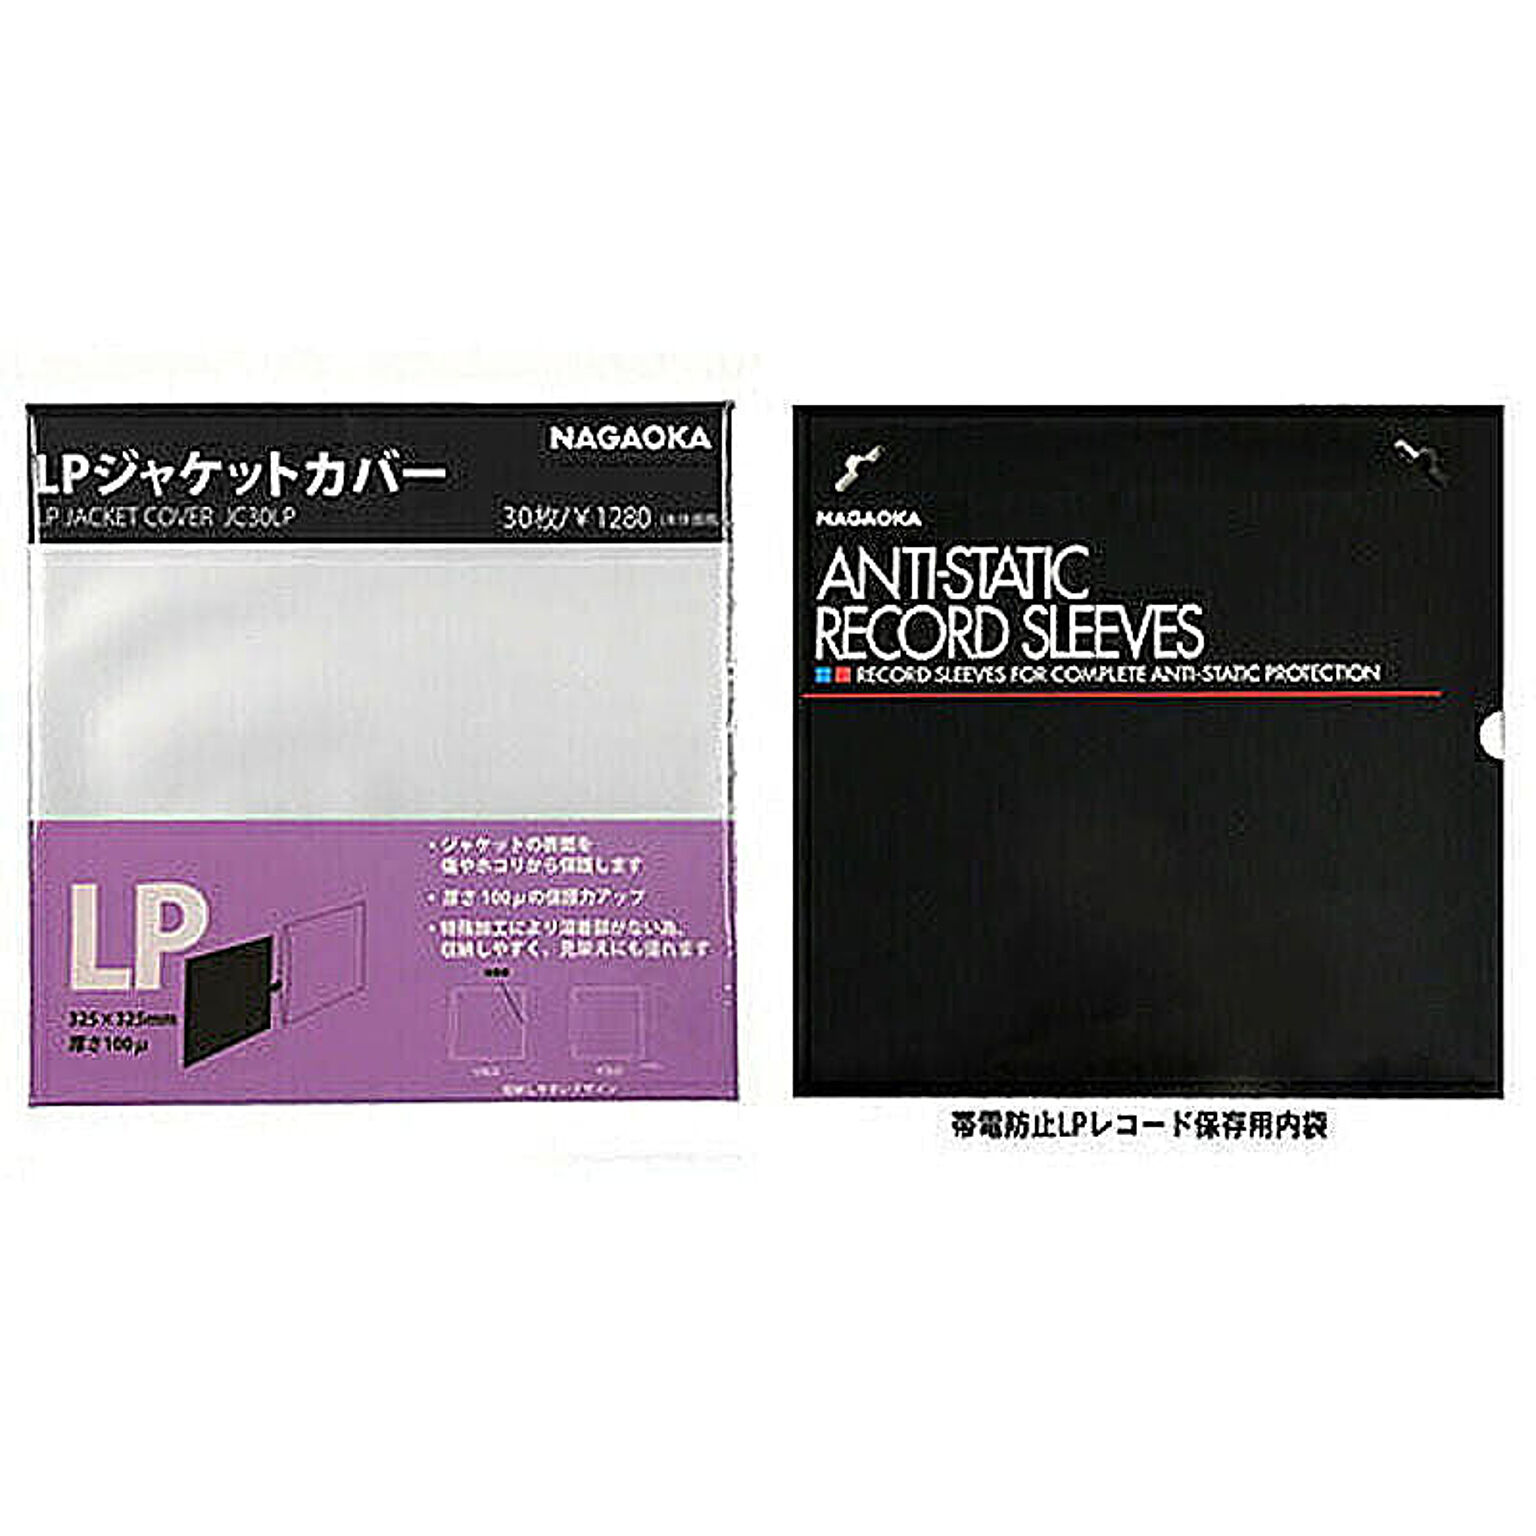 NAGAOKA LPレコードジャケットカバー + LPレコード保存用内袋 JC30LP+RS-LP2 管理No. 4589452996124